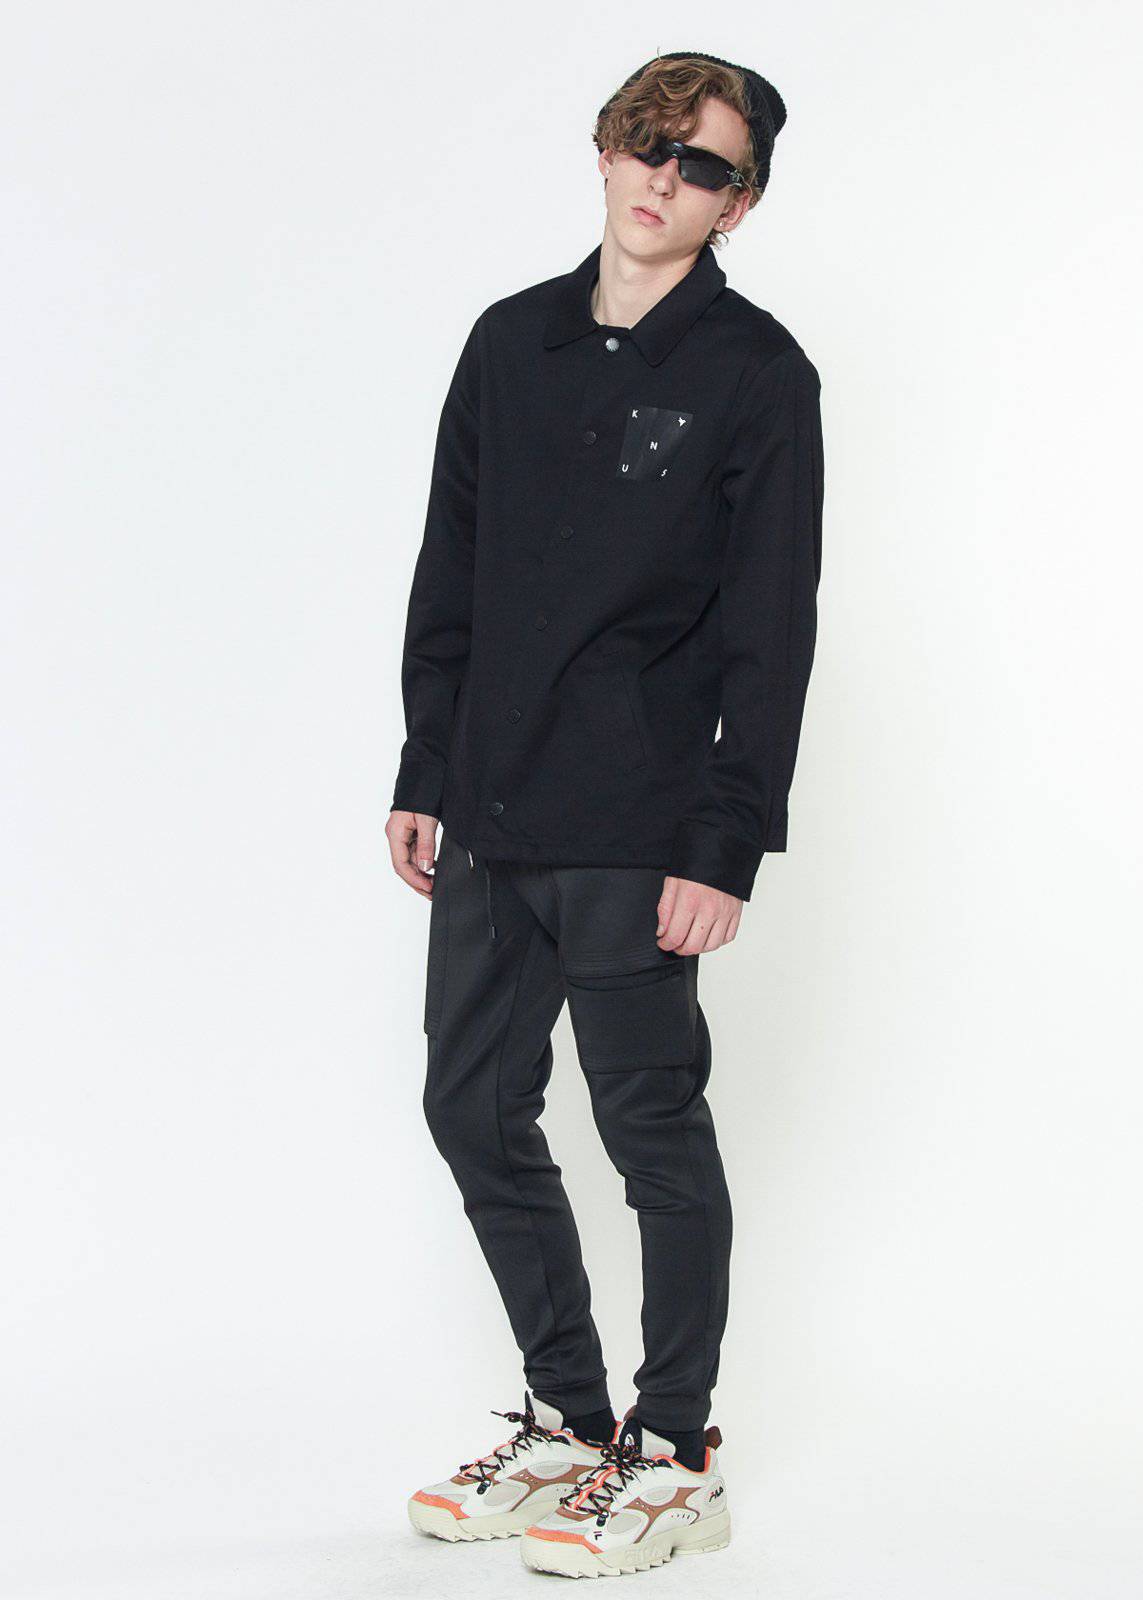 Konus Men's Coaches Jacket in Custom Camo Fabric in Black by Shop at Konus